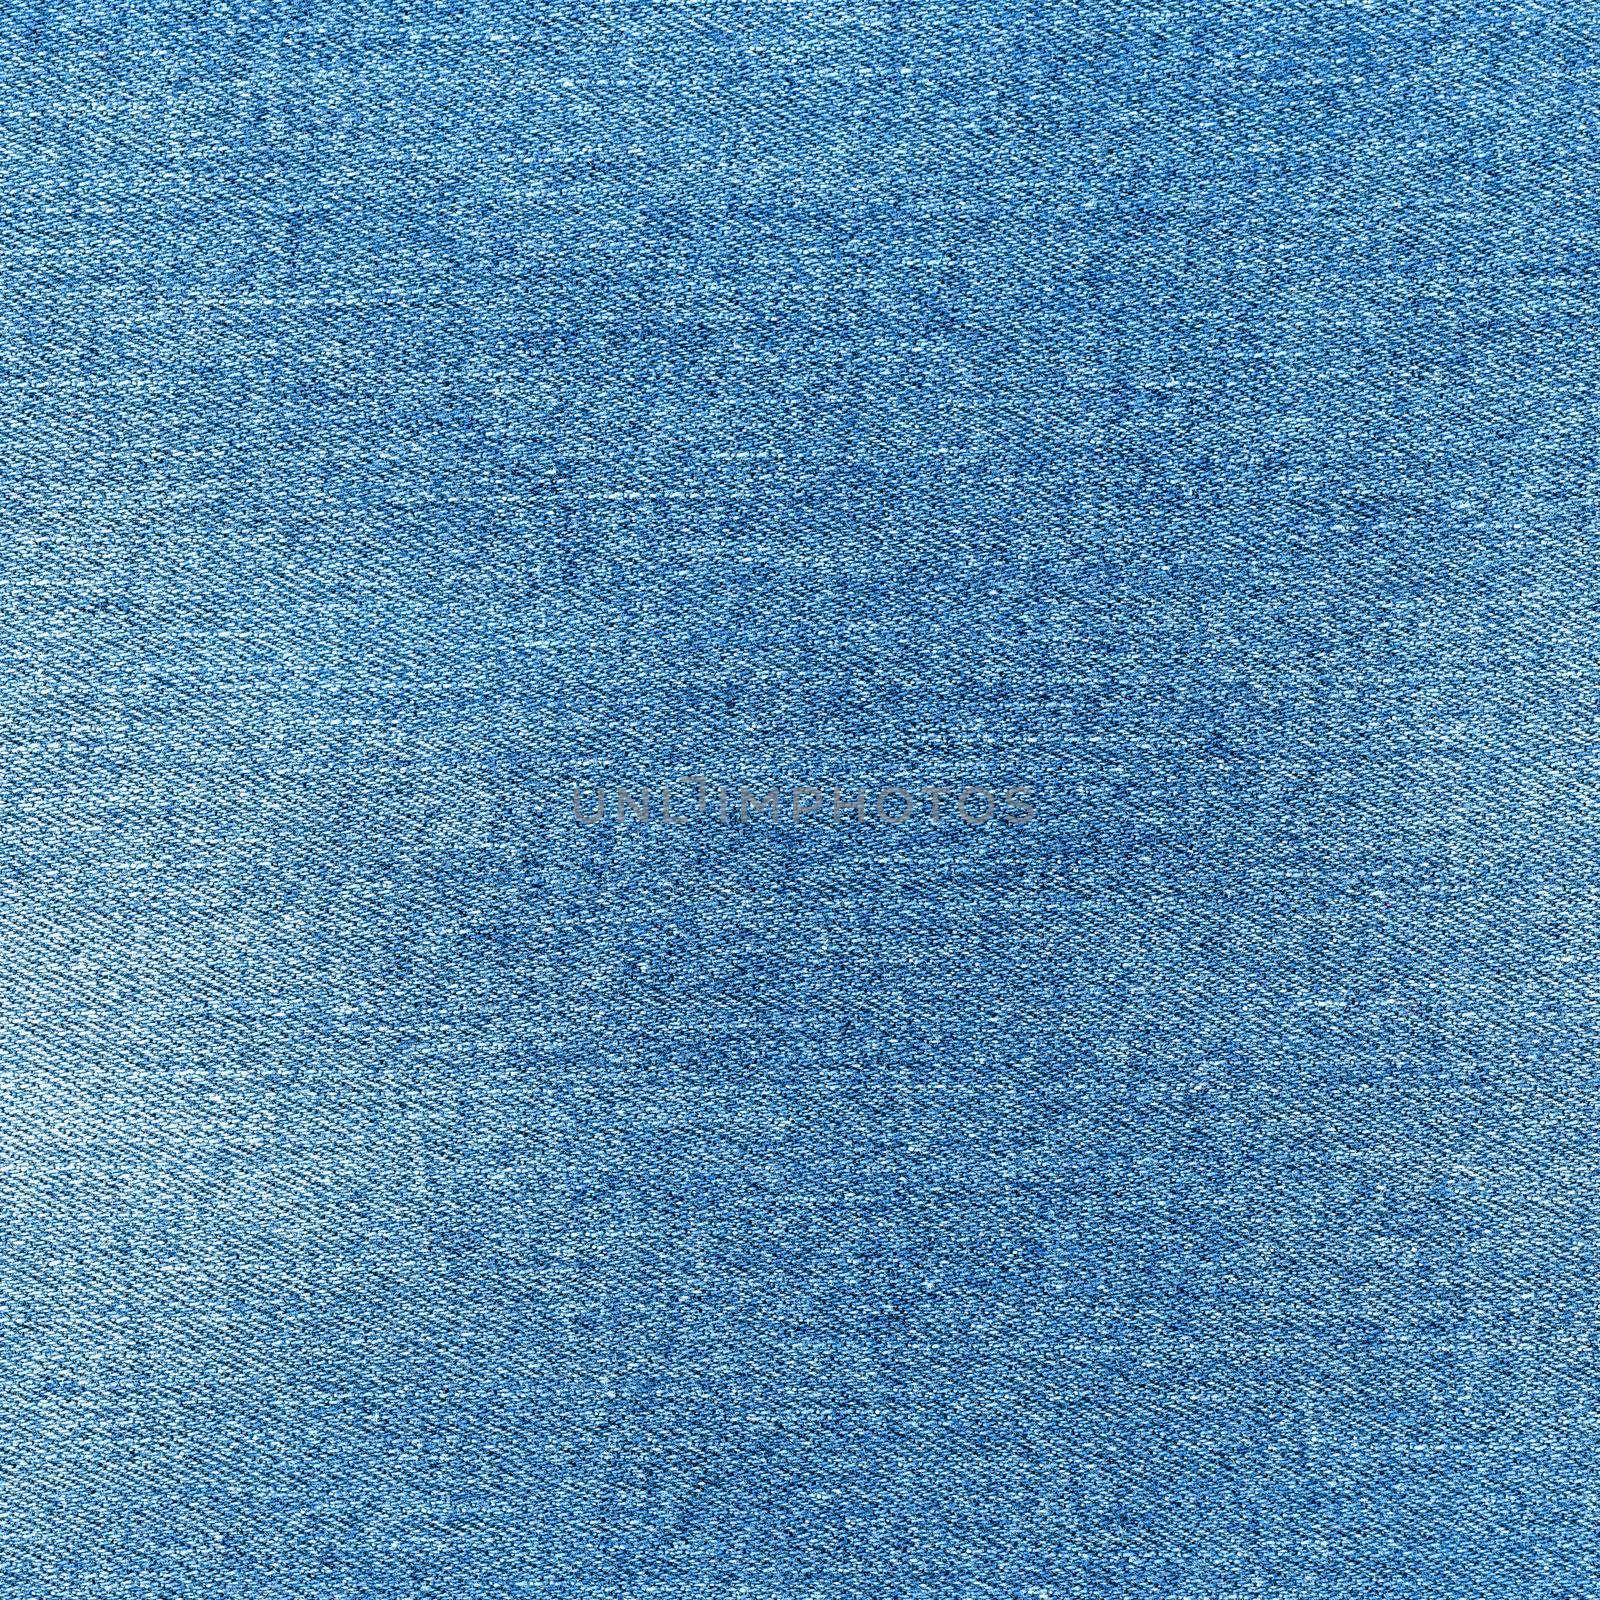 Denim texture. Light blue jeans background by ESSL